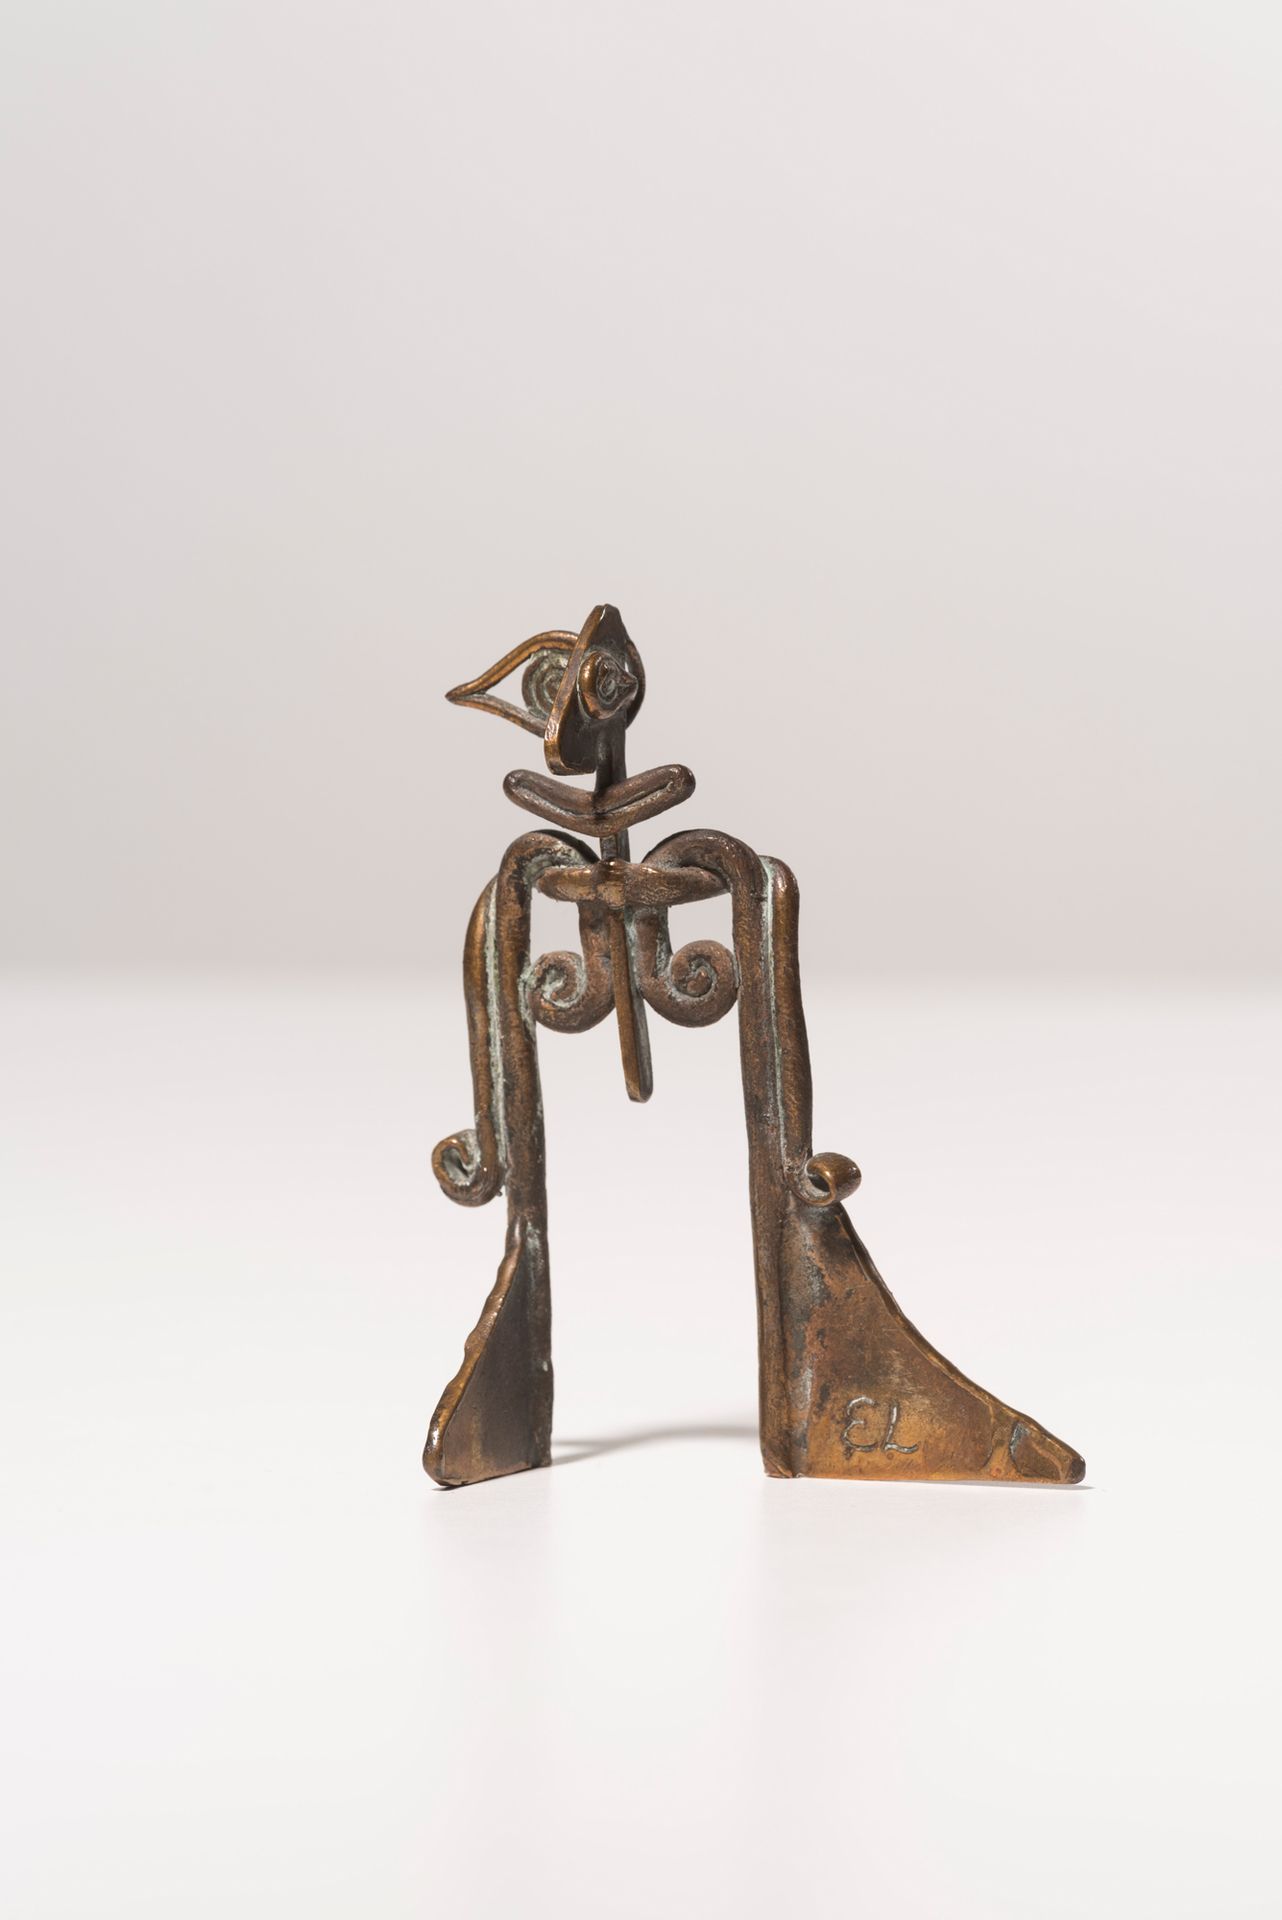 OLIVIER LELOUP (1951-2000) 向毕加索致敬。
青铜。
Brons.Monogrammed.Een monogram
H: 8,5 cm